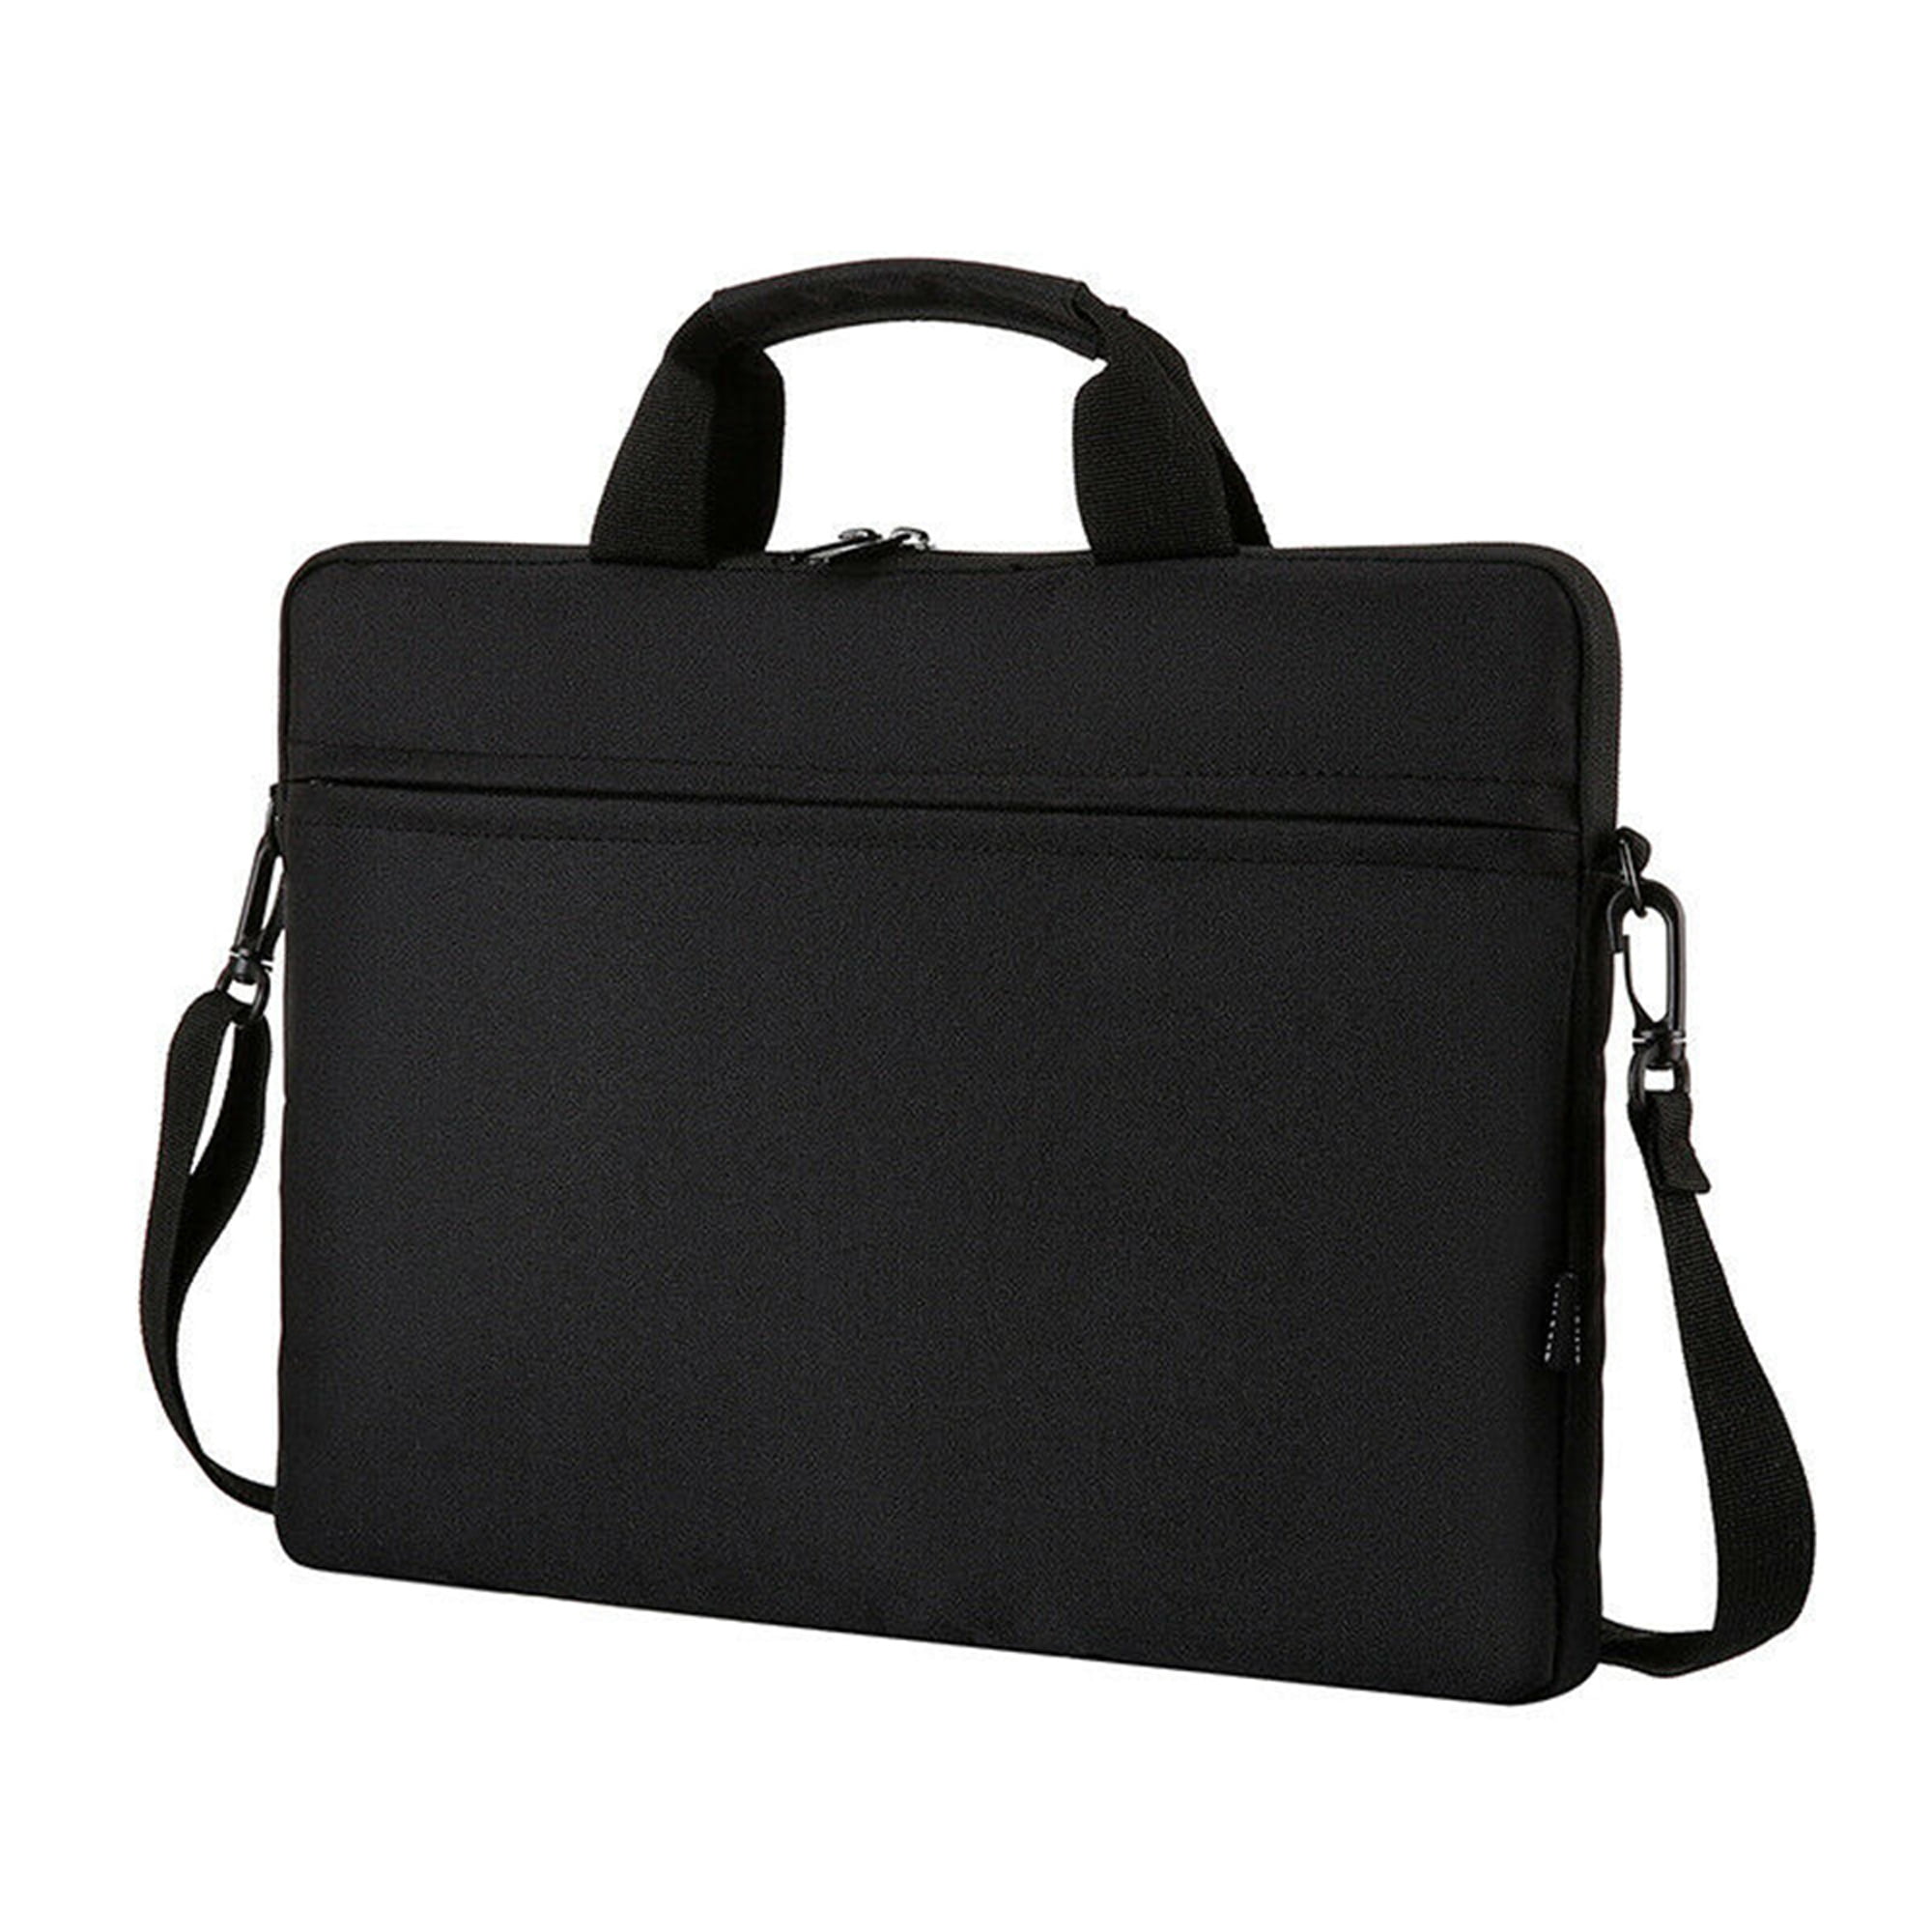 17.3 Inch Laptop Bag,LIGHT FLIGHT Expandable Briefcase for Men Women,Slim Laptop Case for Computer,Travel Business Bag,Pink 